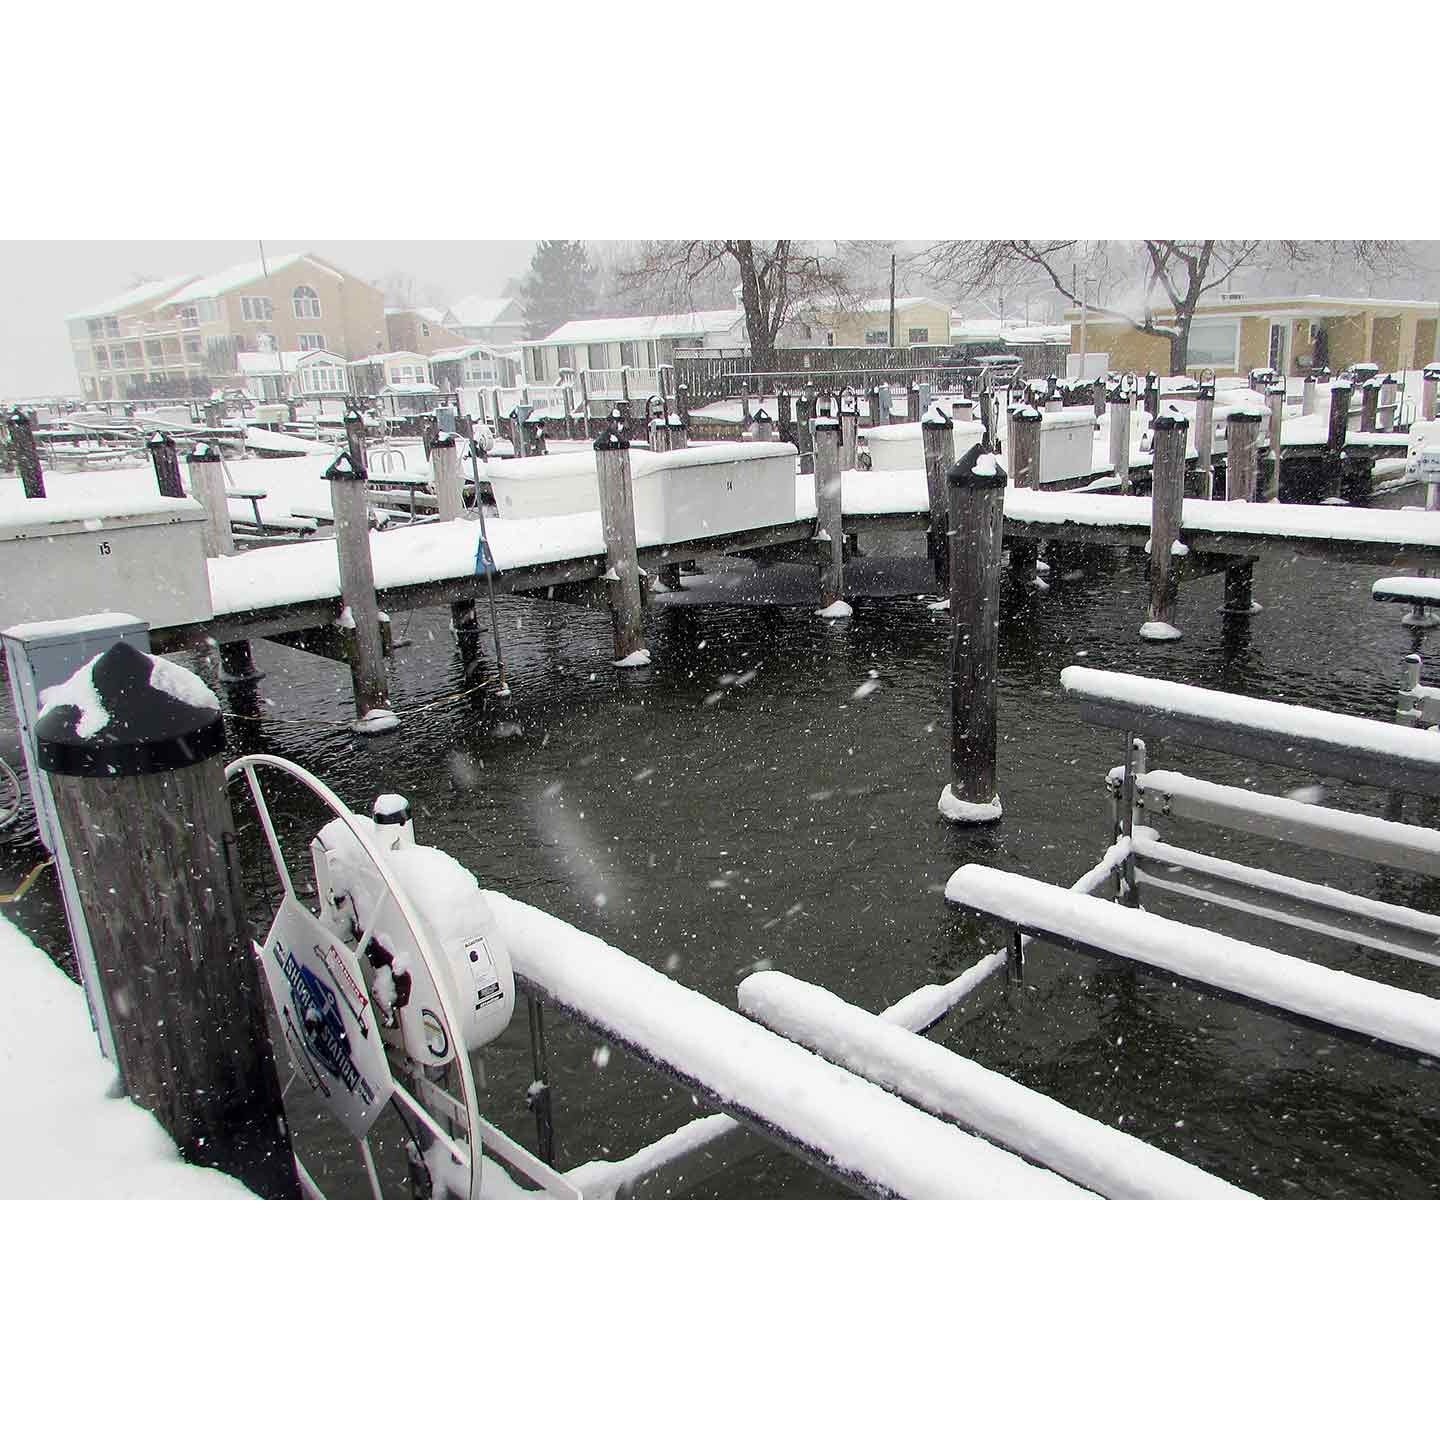 Scott Aerator Slinger De-icer - Protects Docks, Boats & Marinas